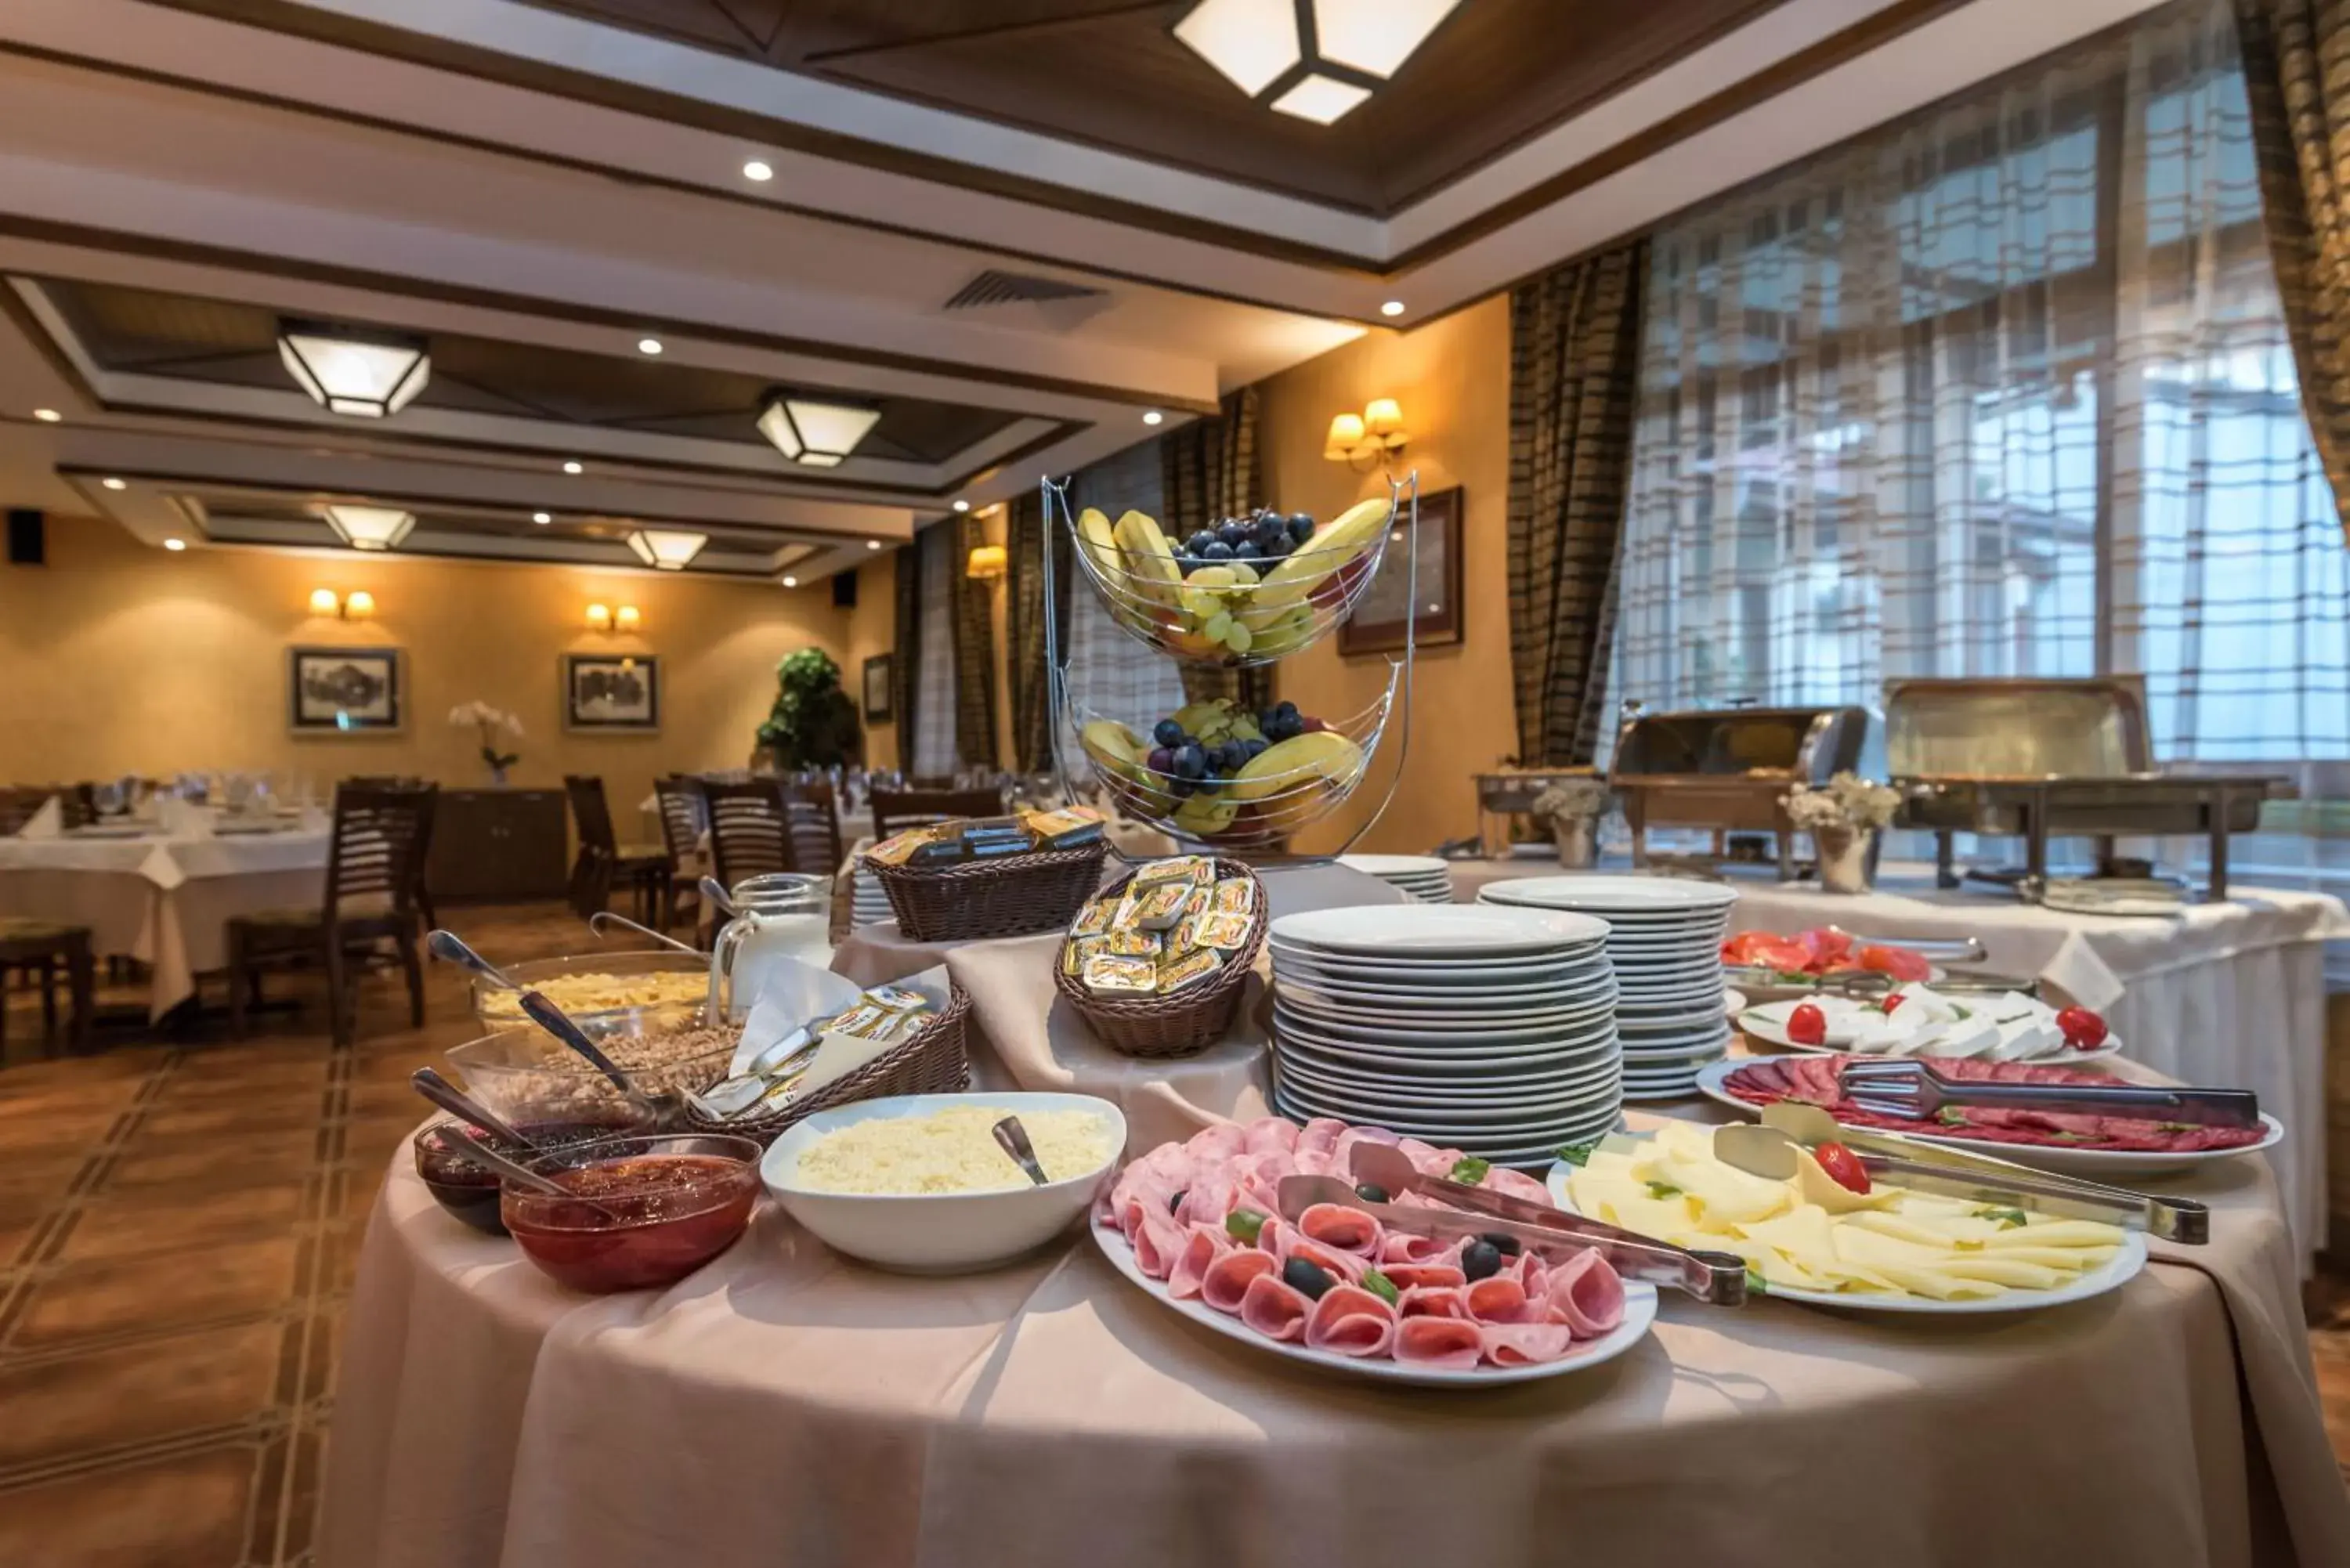 Buffet breakfast in Evelina Palace Hotel